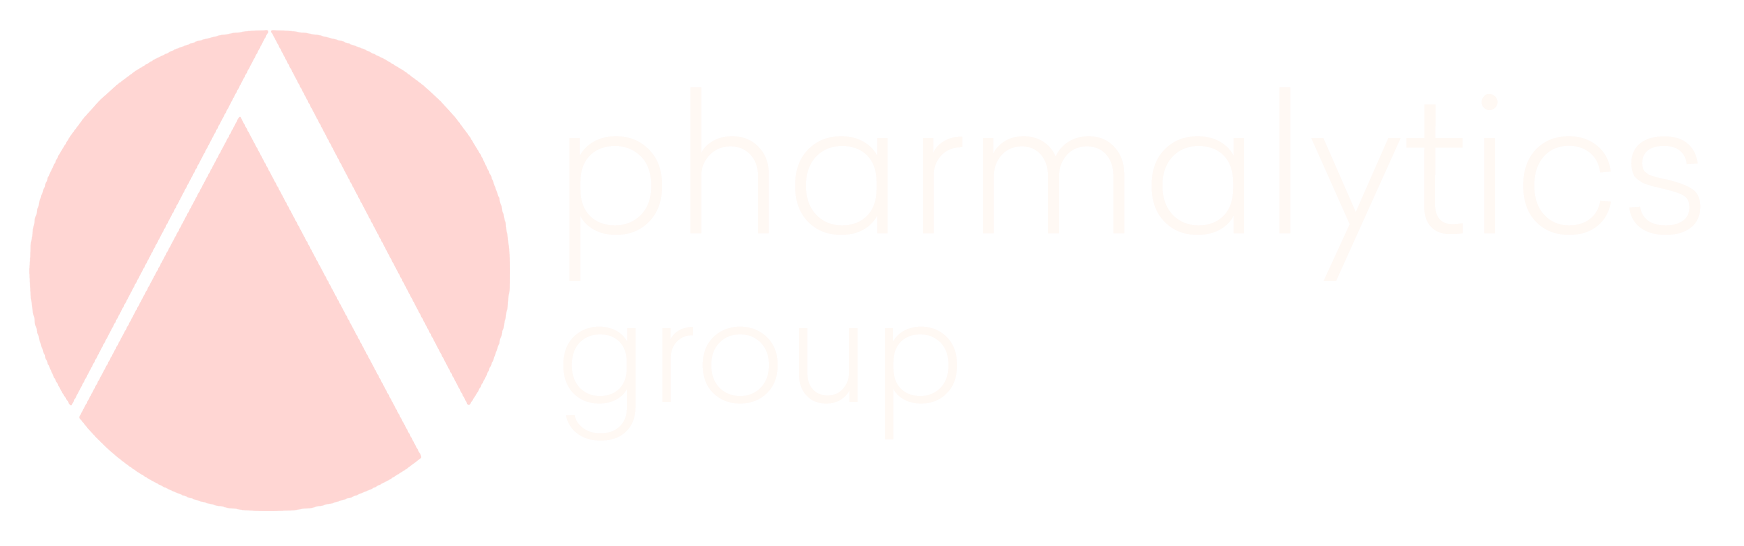 Pharmalytics group